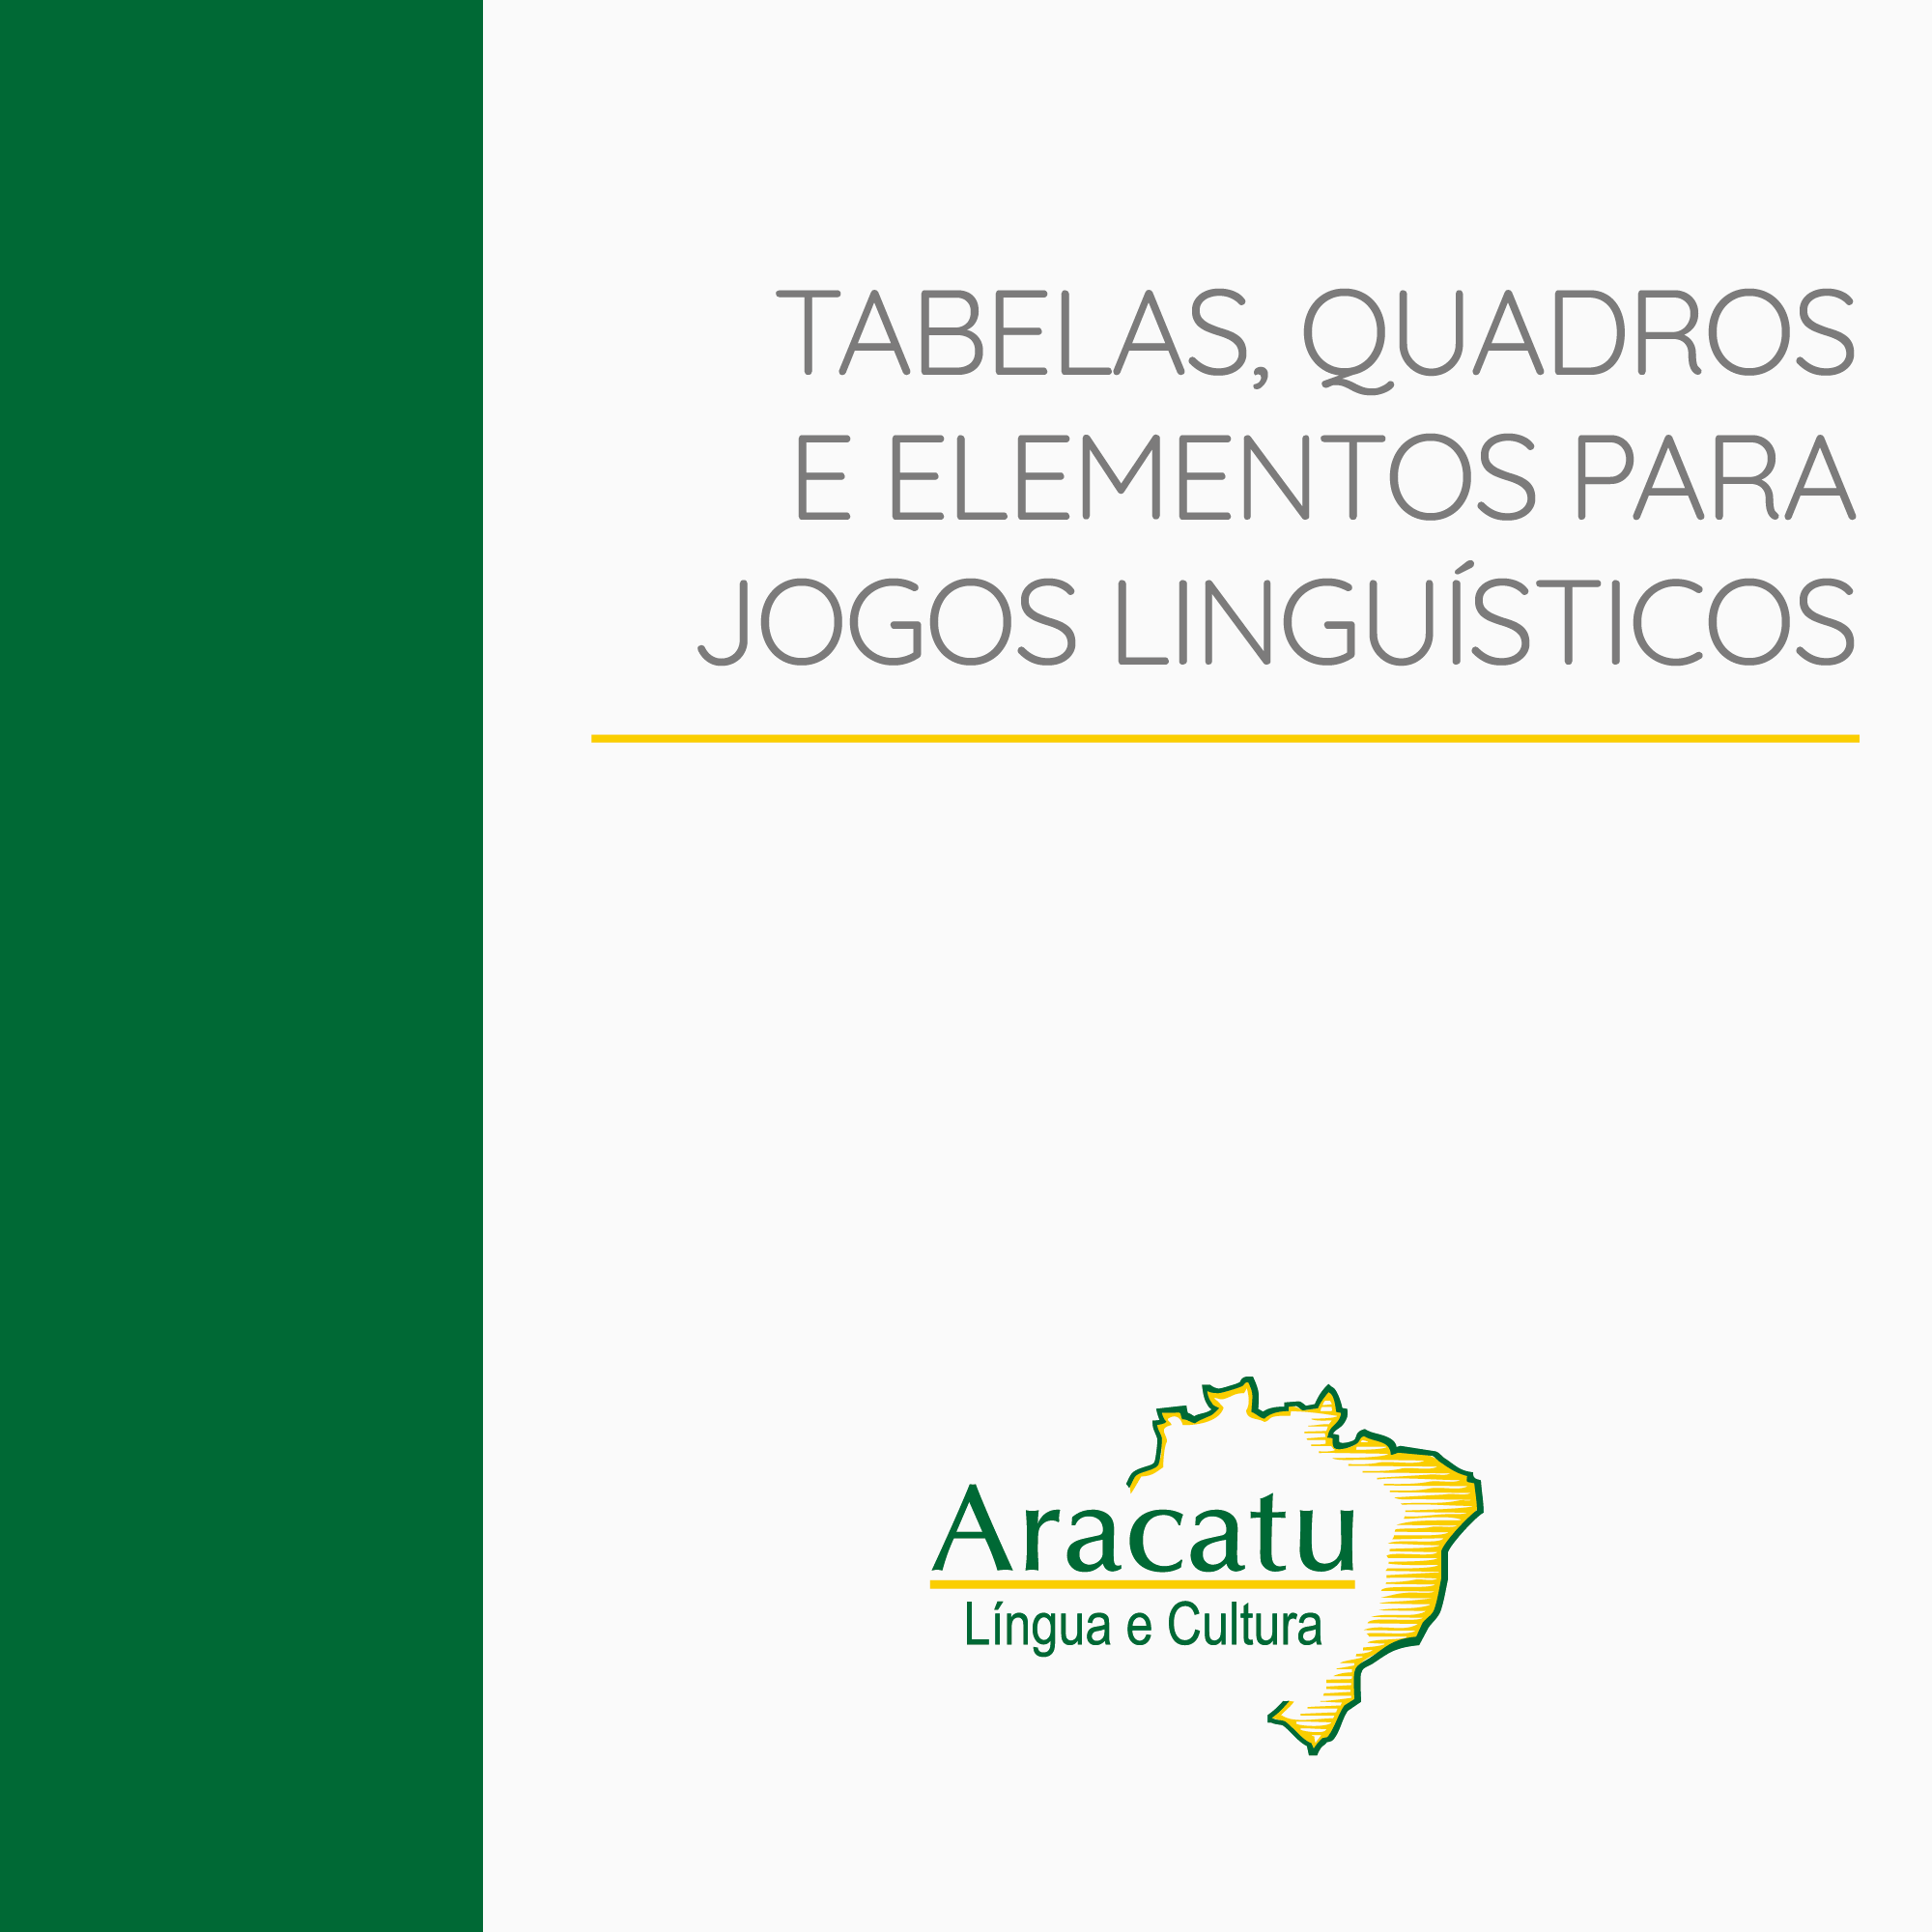 capa-jog-linguisticos.png